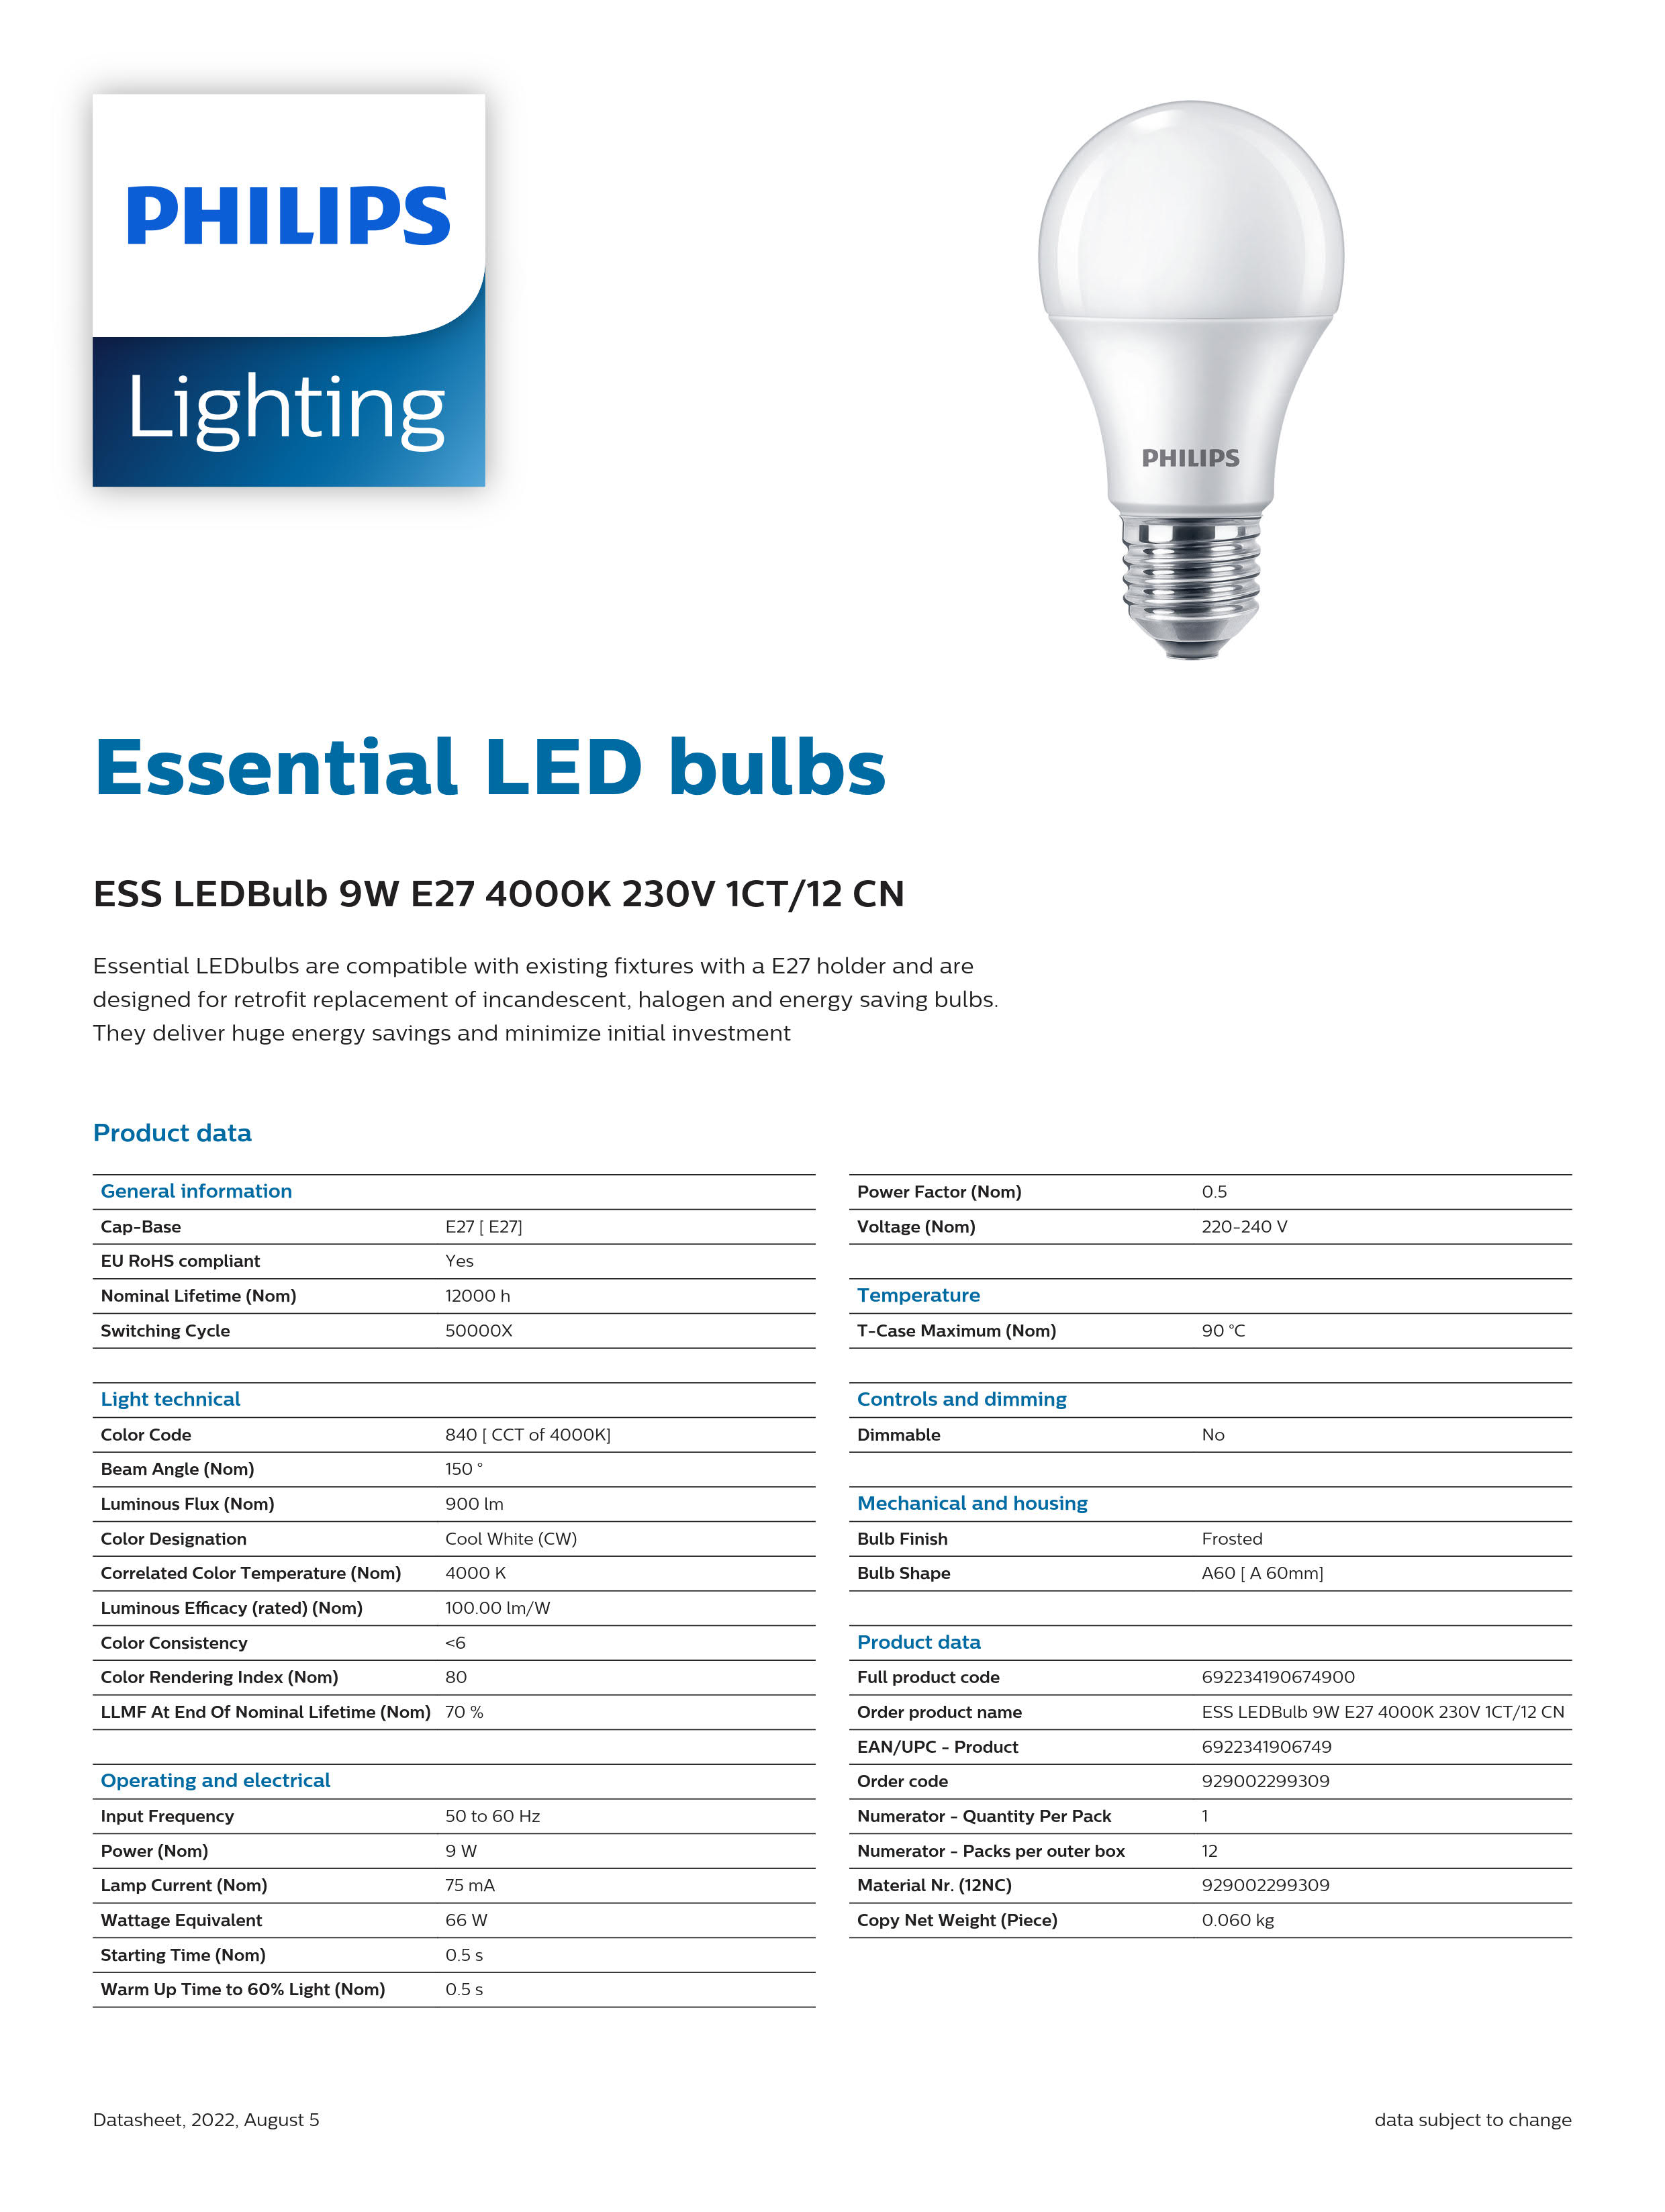 PHILIPS Essential LED bulbs 9W E27 4000K 230V 1CT/12 CN 929002299309